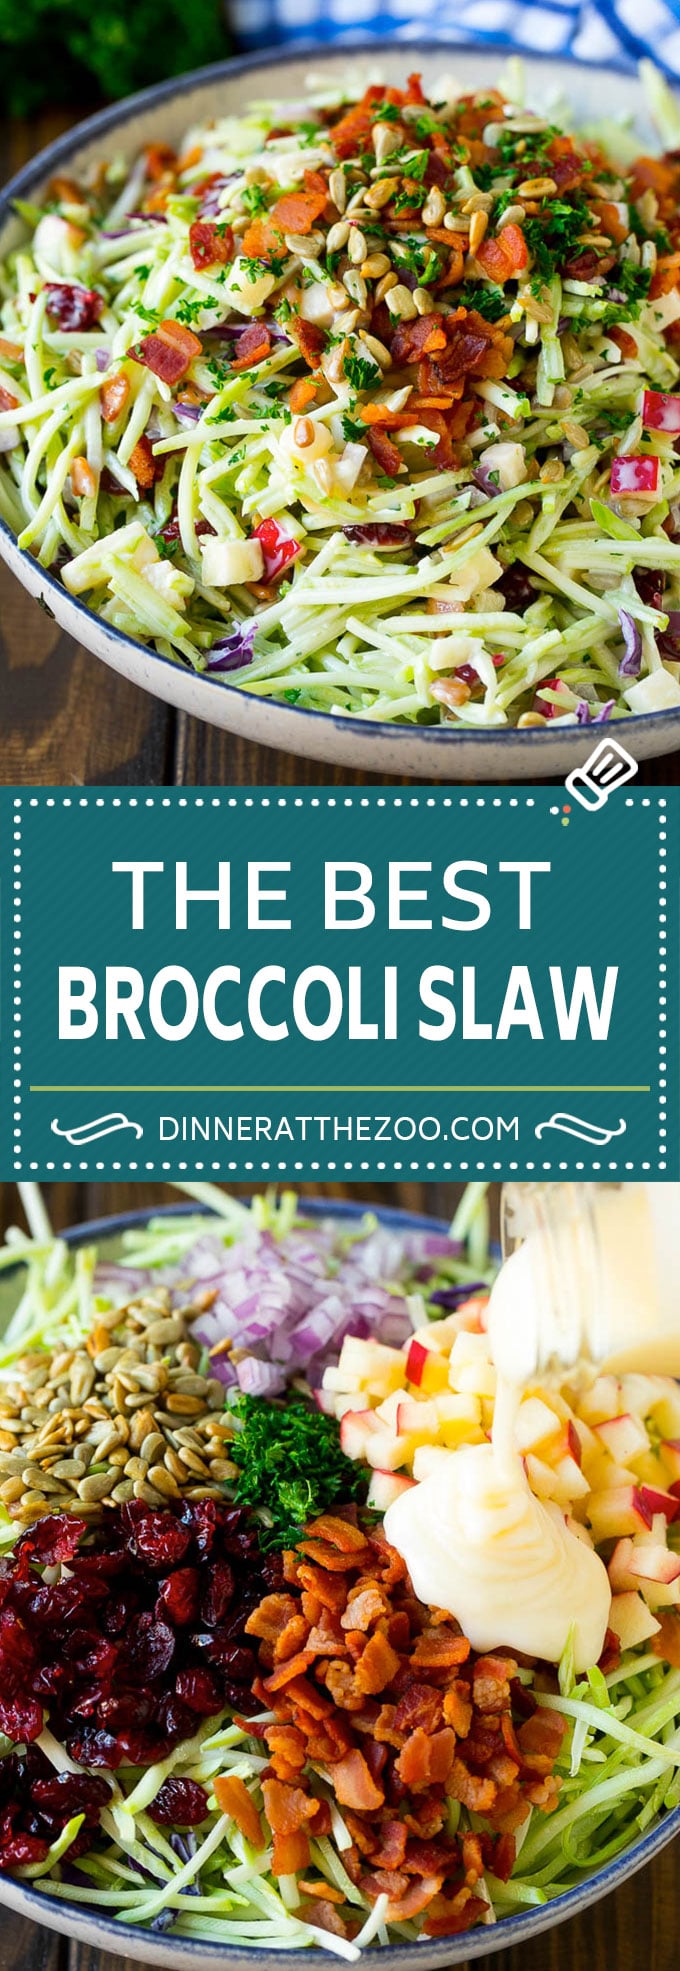 Bacon Broccoli Slaw Recipe | Coleslaw Recipe | Broccoli Slaw #broccoli #slaw #salad #apple #bacon #sidedish #lunch #dinneratthezoo